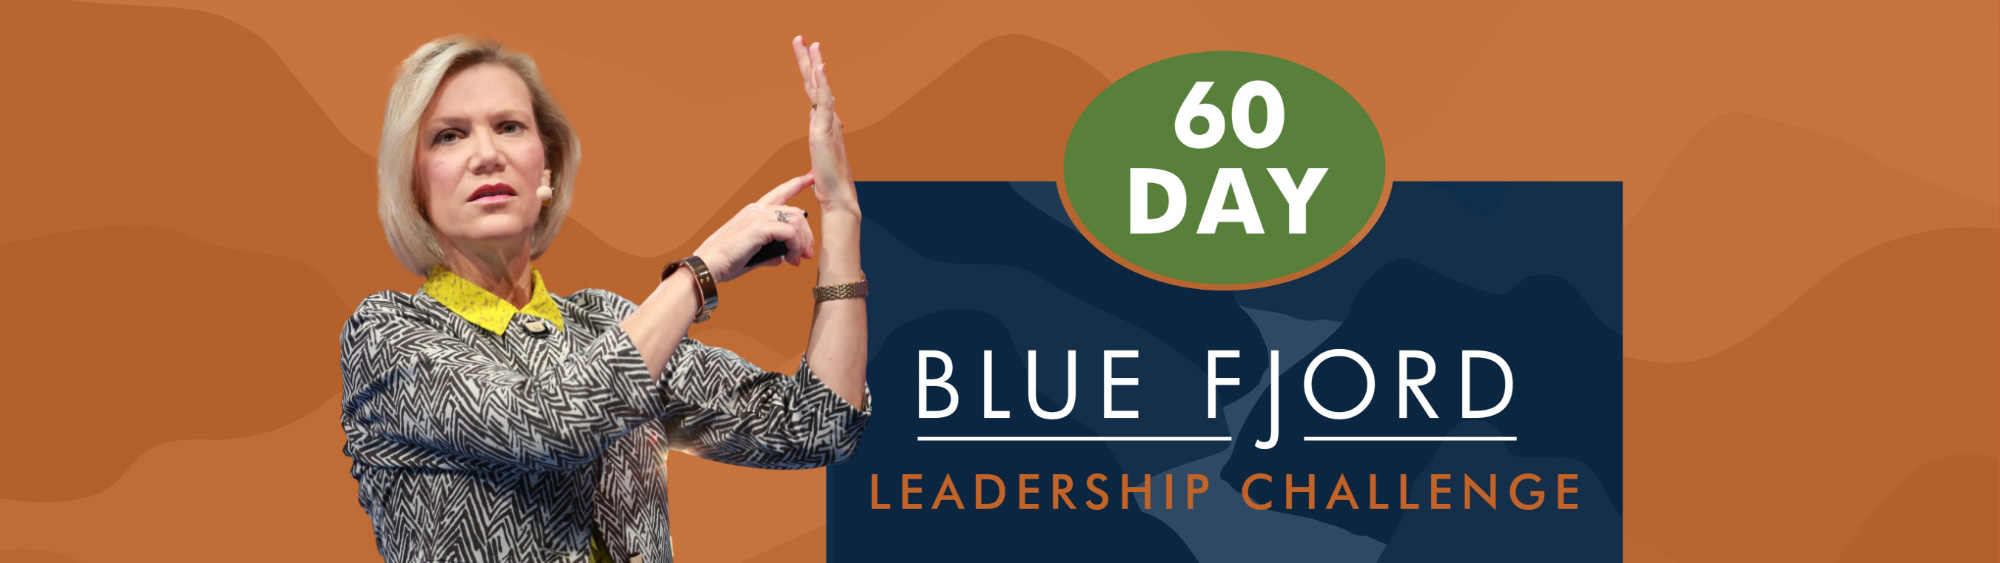 60 Day Blue Fjord Leadership Challenge